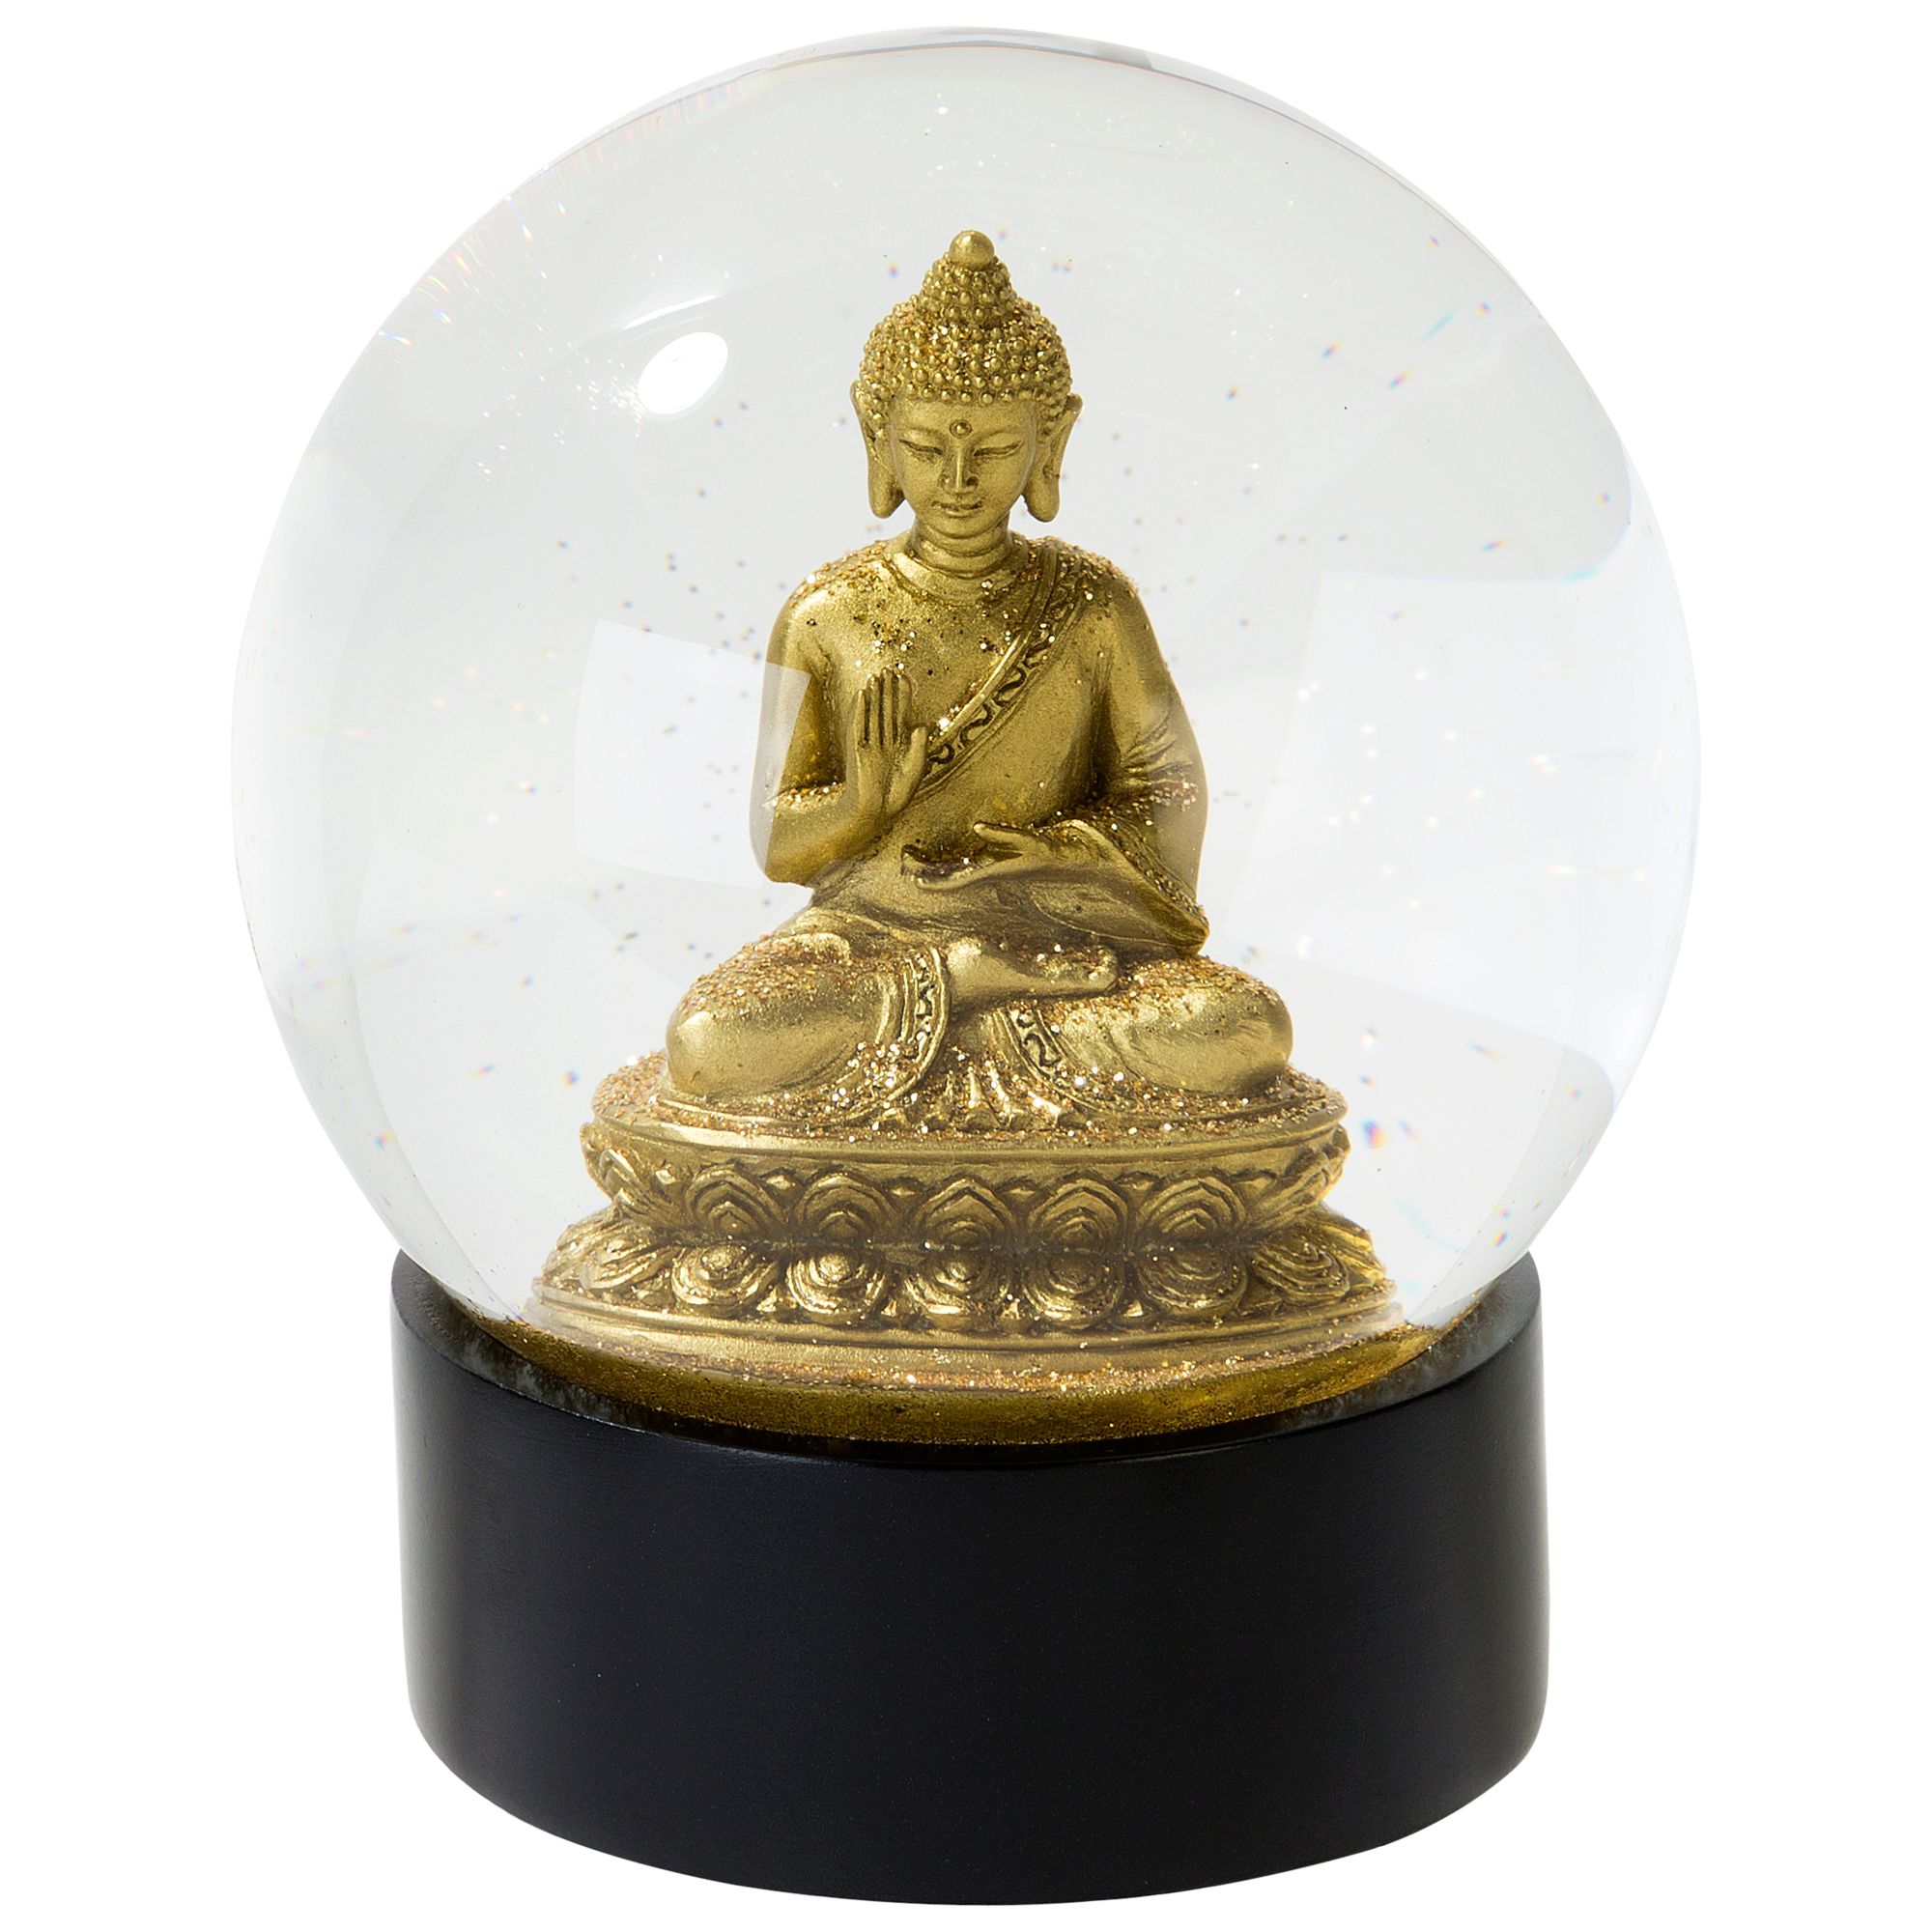 Meditation Decoration Ornaments Meditation Object Glittery Buddha Globe Gift Ideas Christmas Gift Buddha Snow Globe Home Decorations